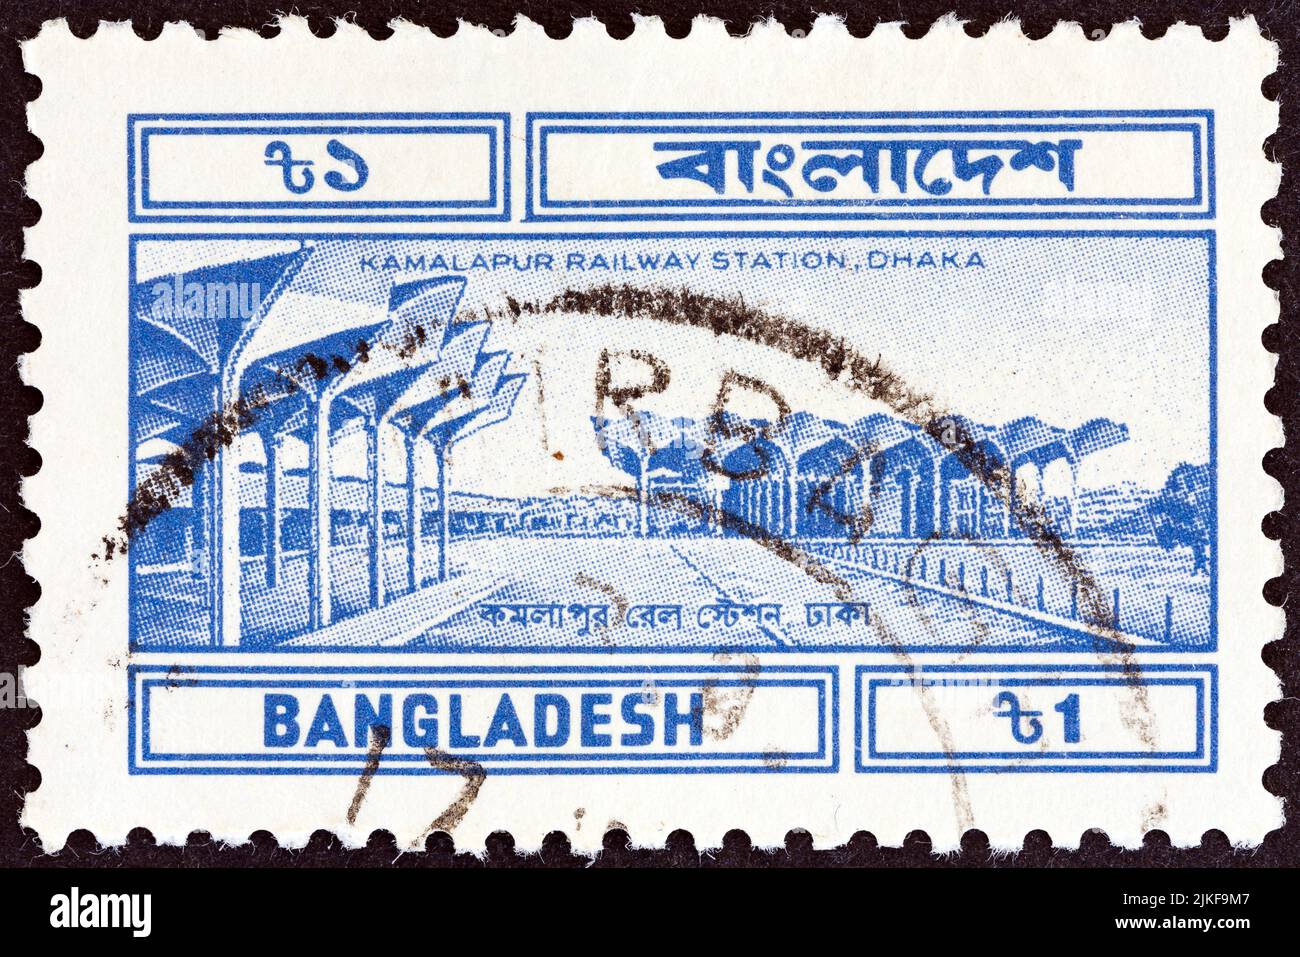 BANGLADESH - CIRCA 1983: A stamp printed in Bangladesh from the 'Postal Communications' issue shows Kamalapur Railway Station, Dhaka, circa 1983. Stock Photo